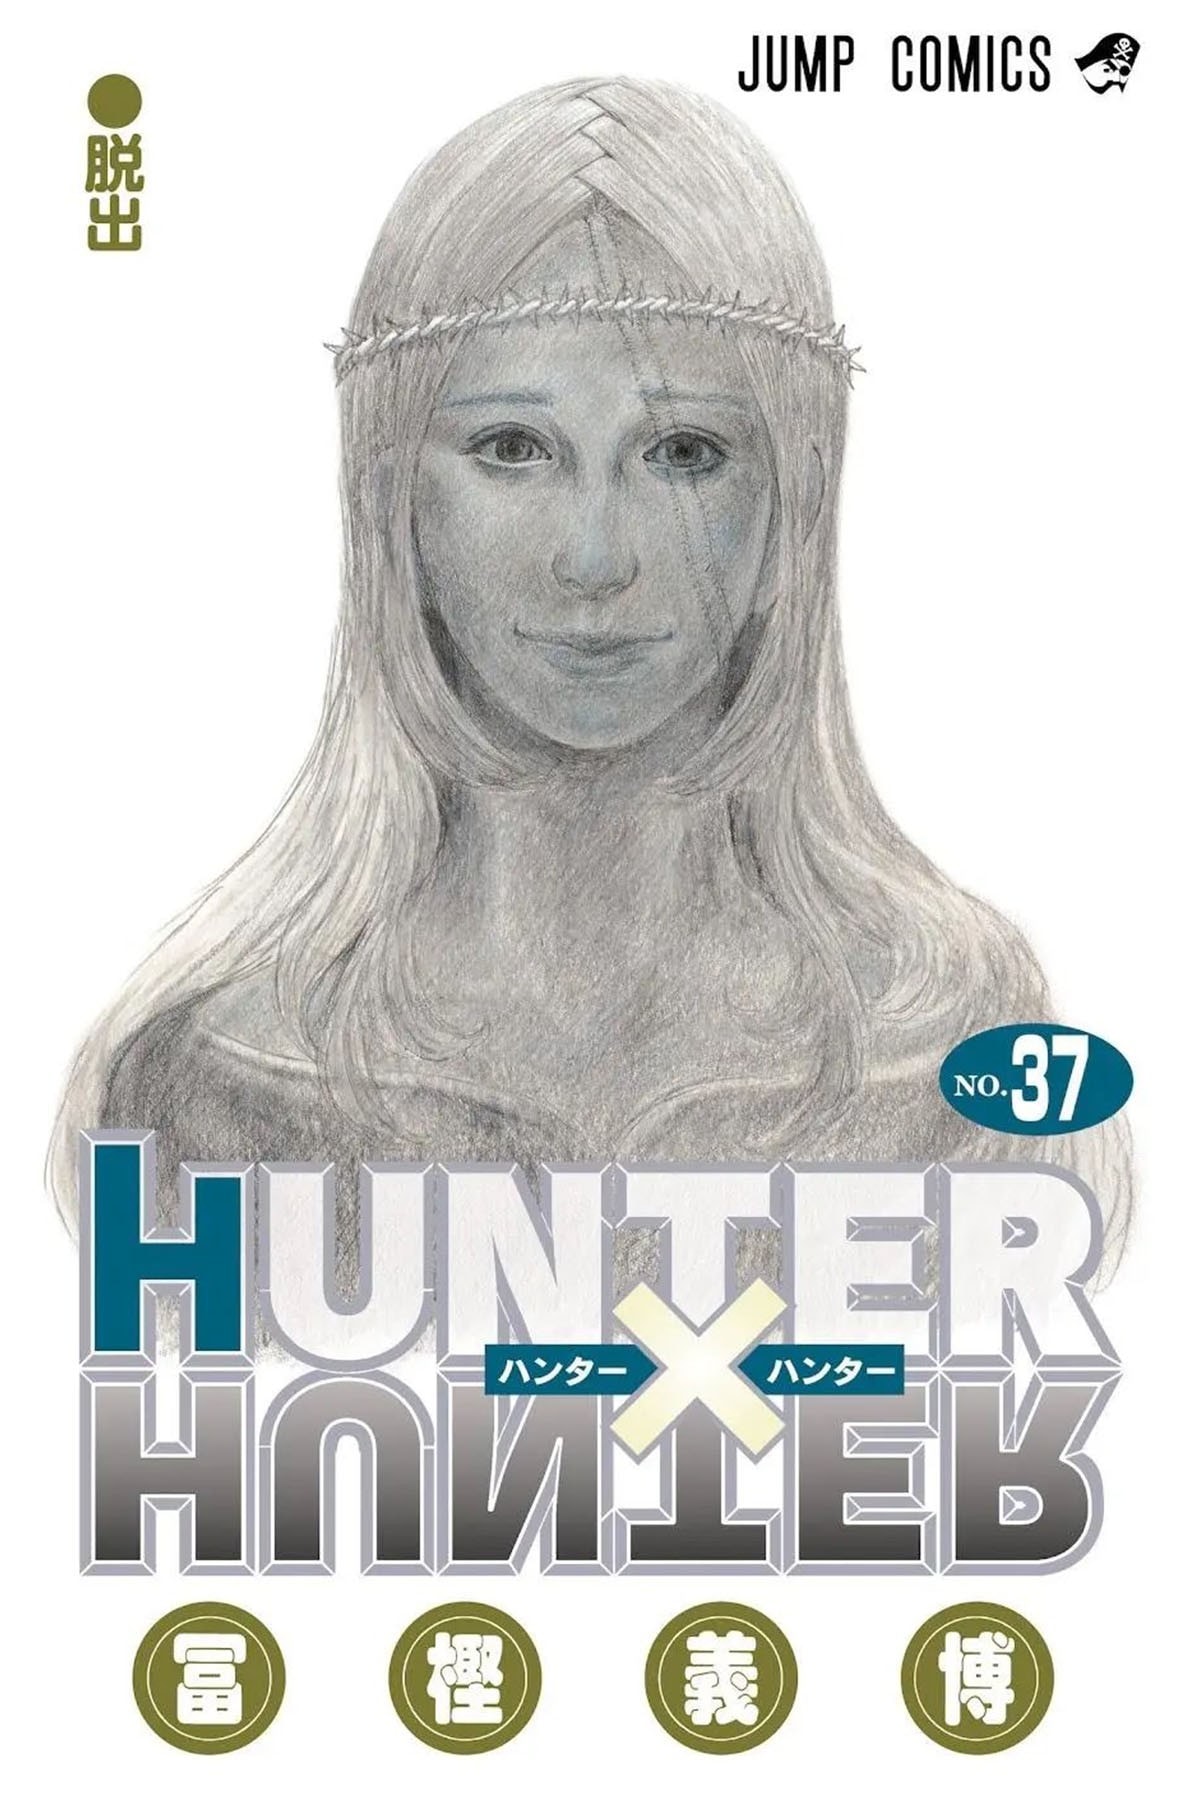 《HUNTER x HUNTER 獵人》連載再開日期確認、第 37 卷單行本封面公開